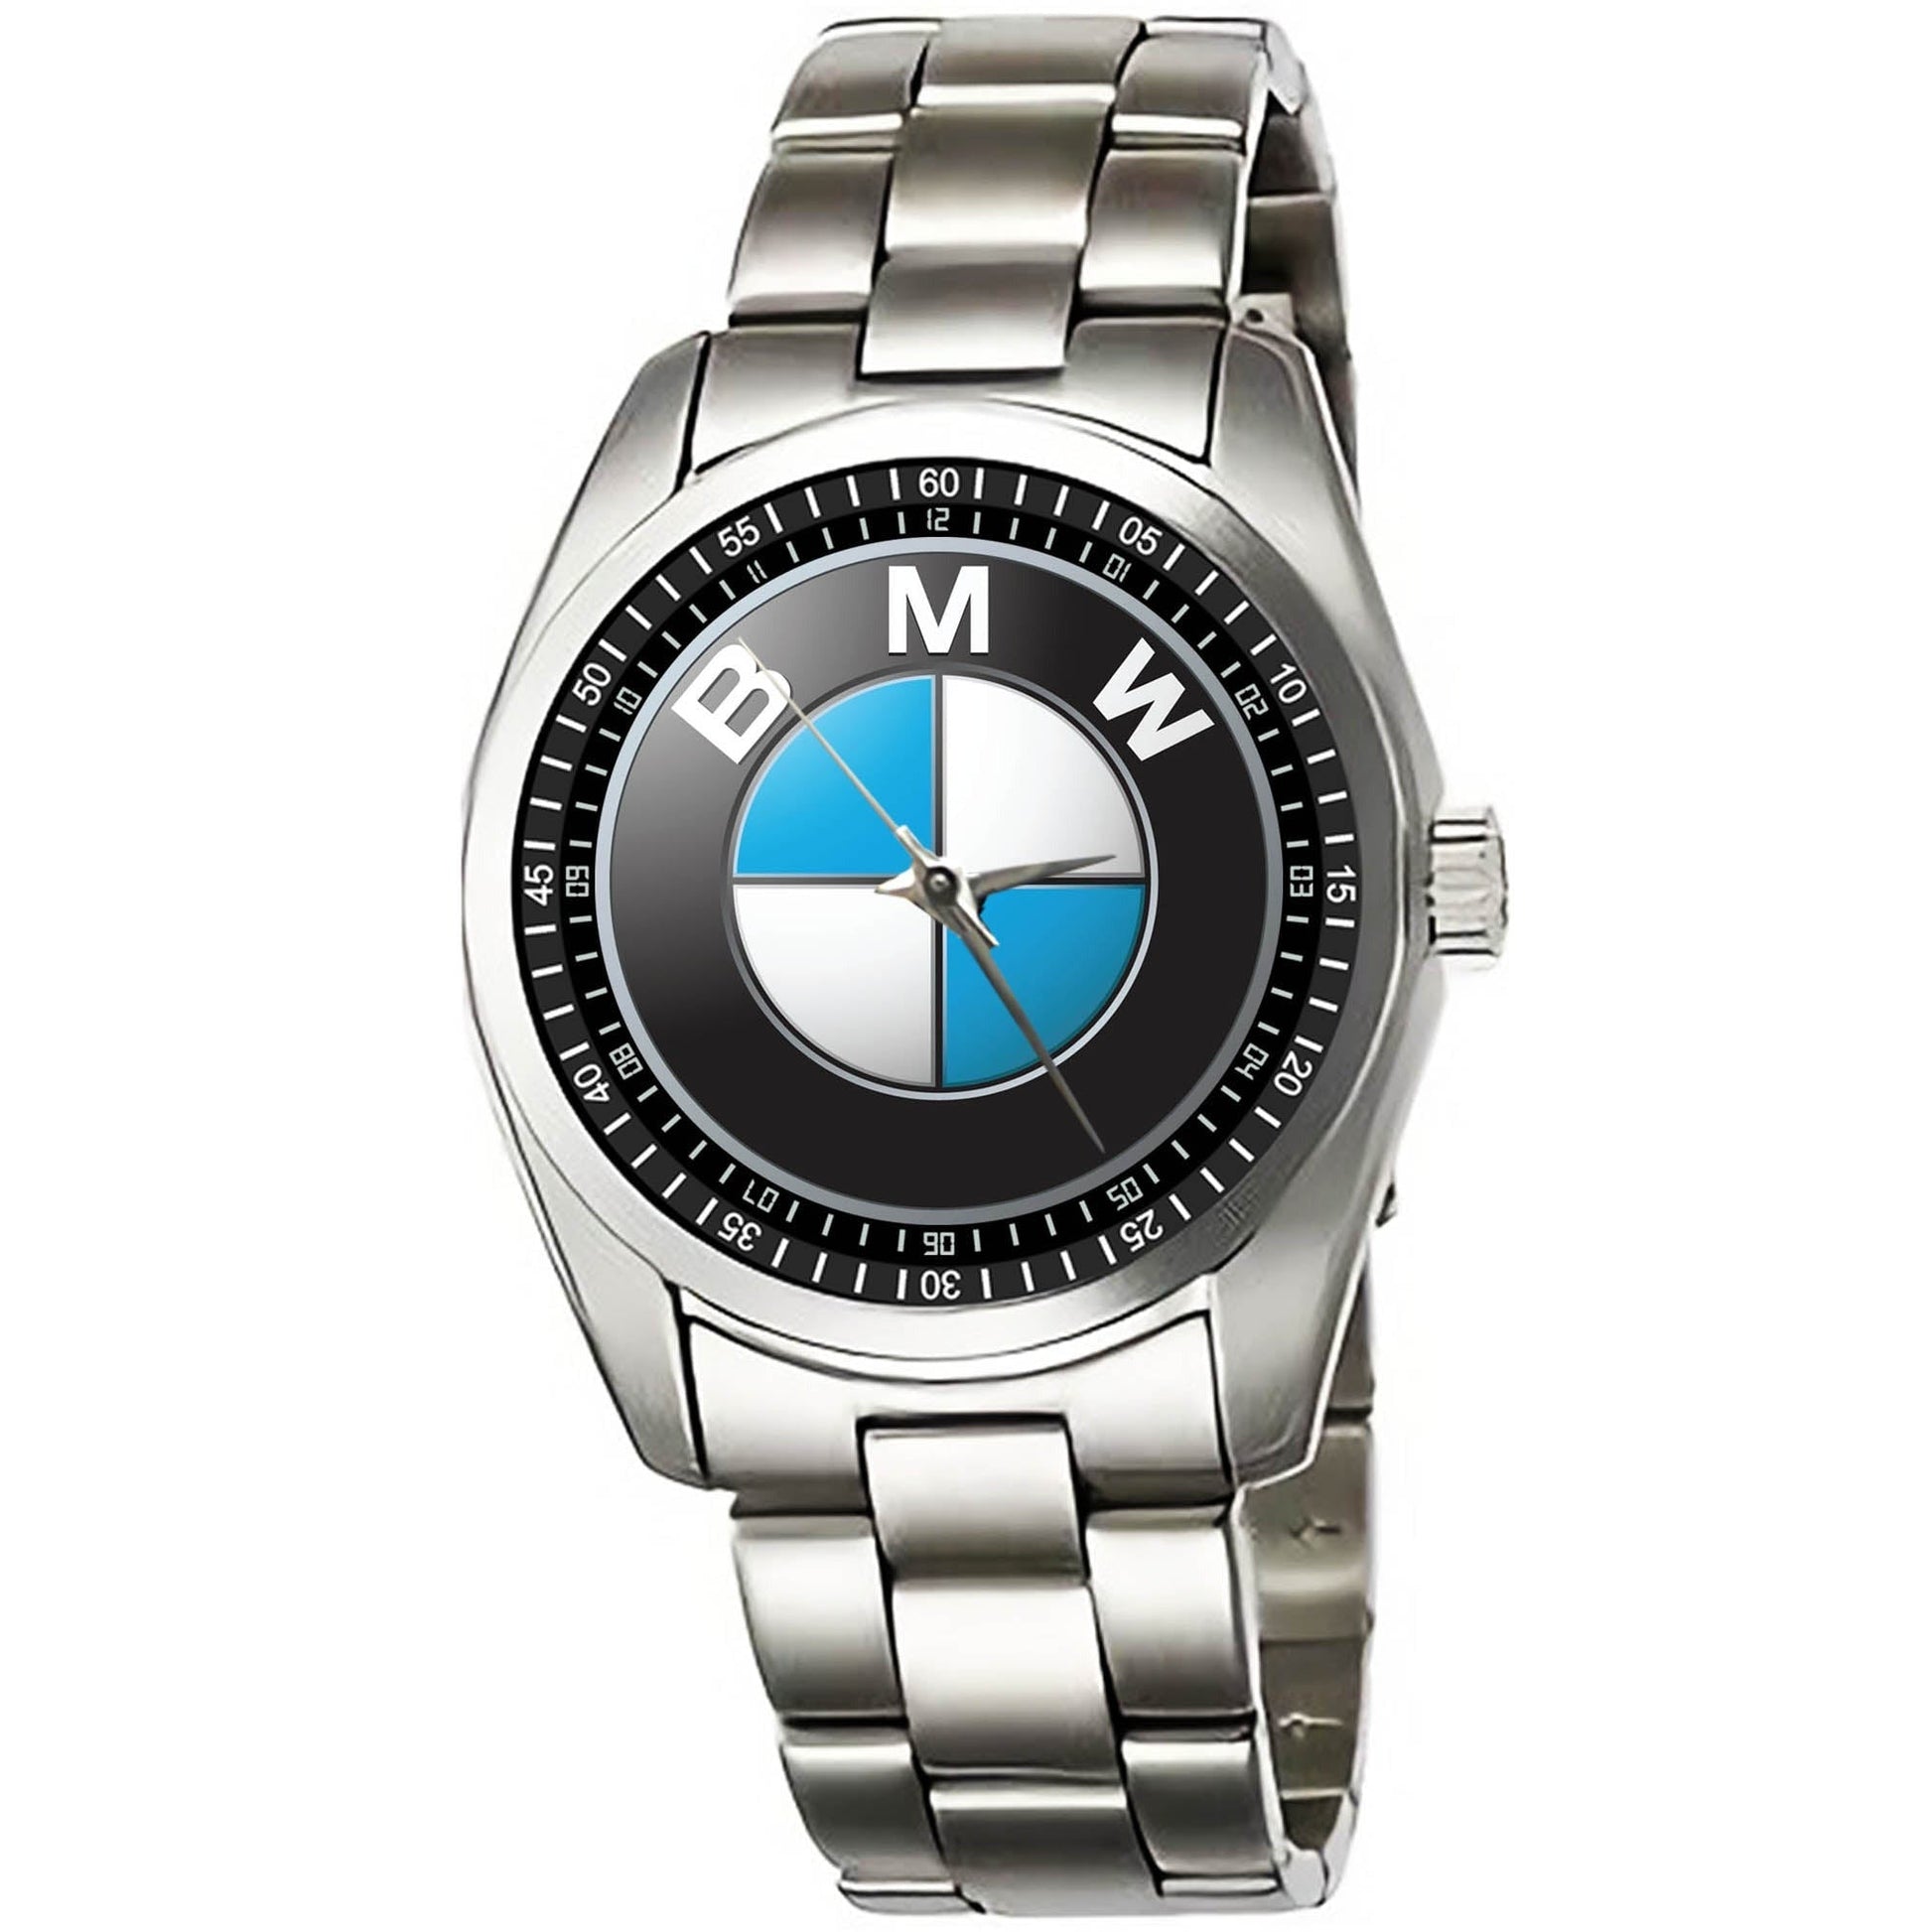 BMW Emblem Watches KP341